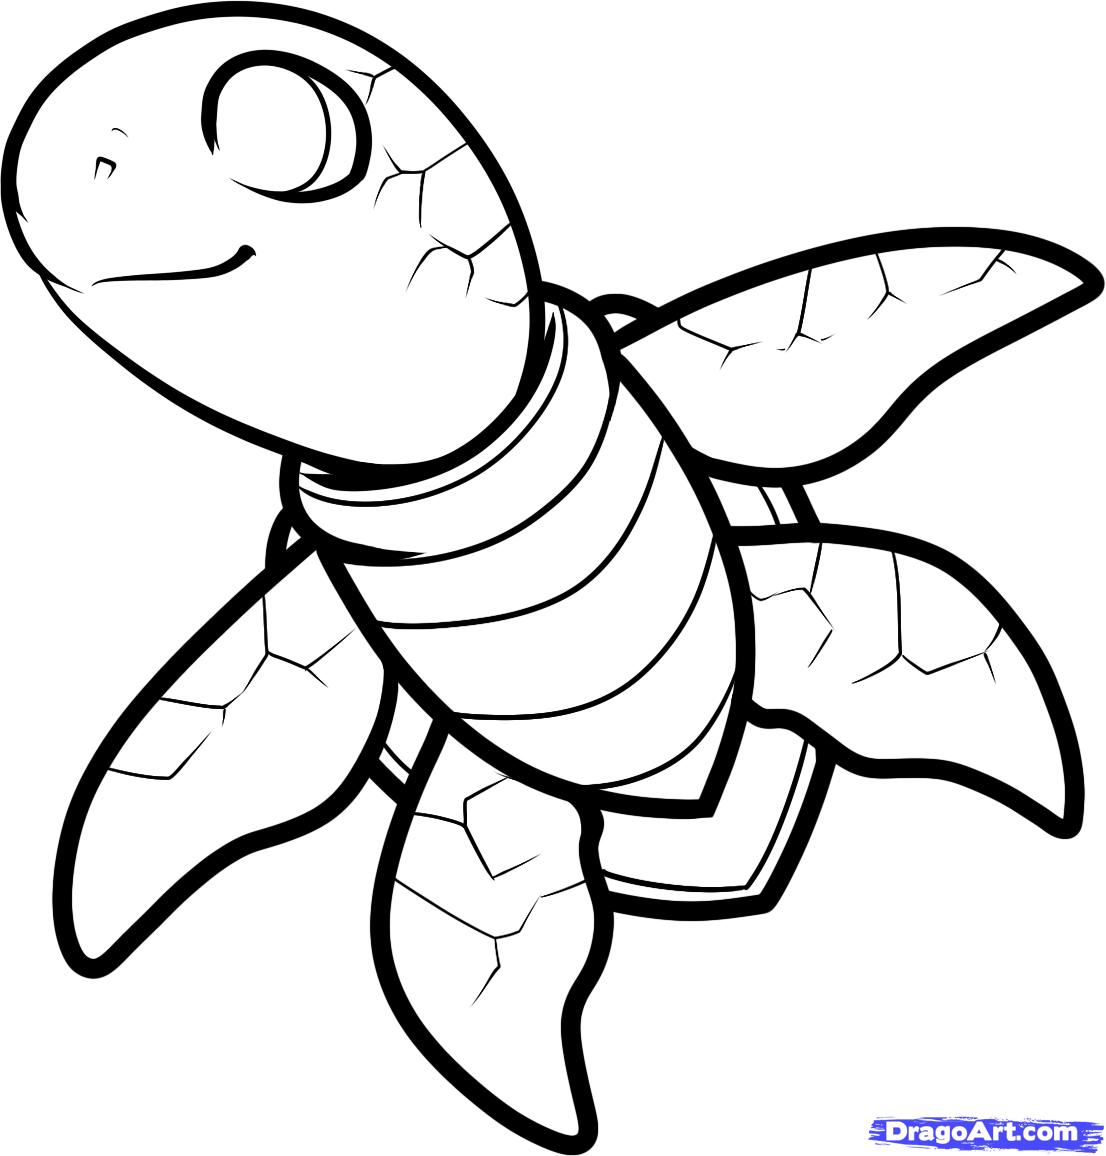 How to Draw a Sea Turtle, Cartoon Sea Turtle, Step by Step ...